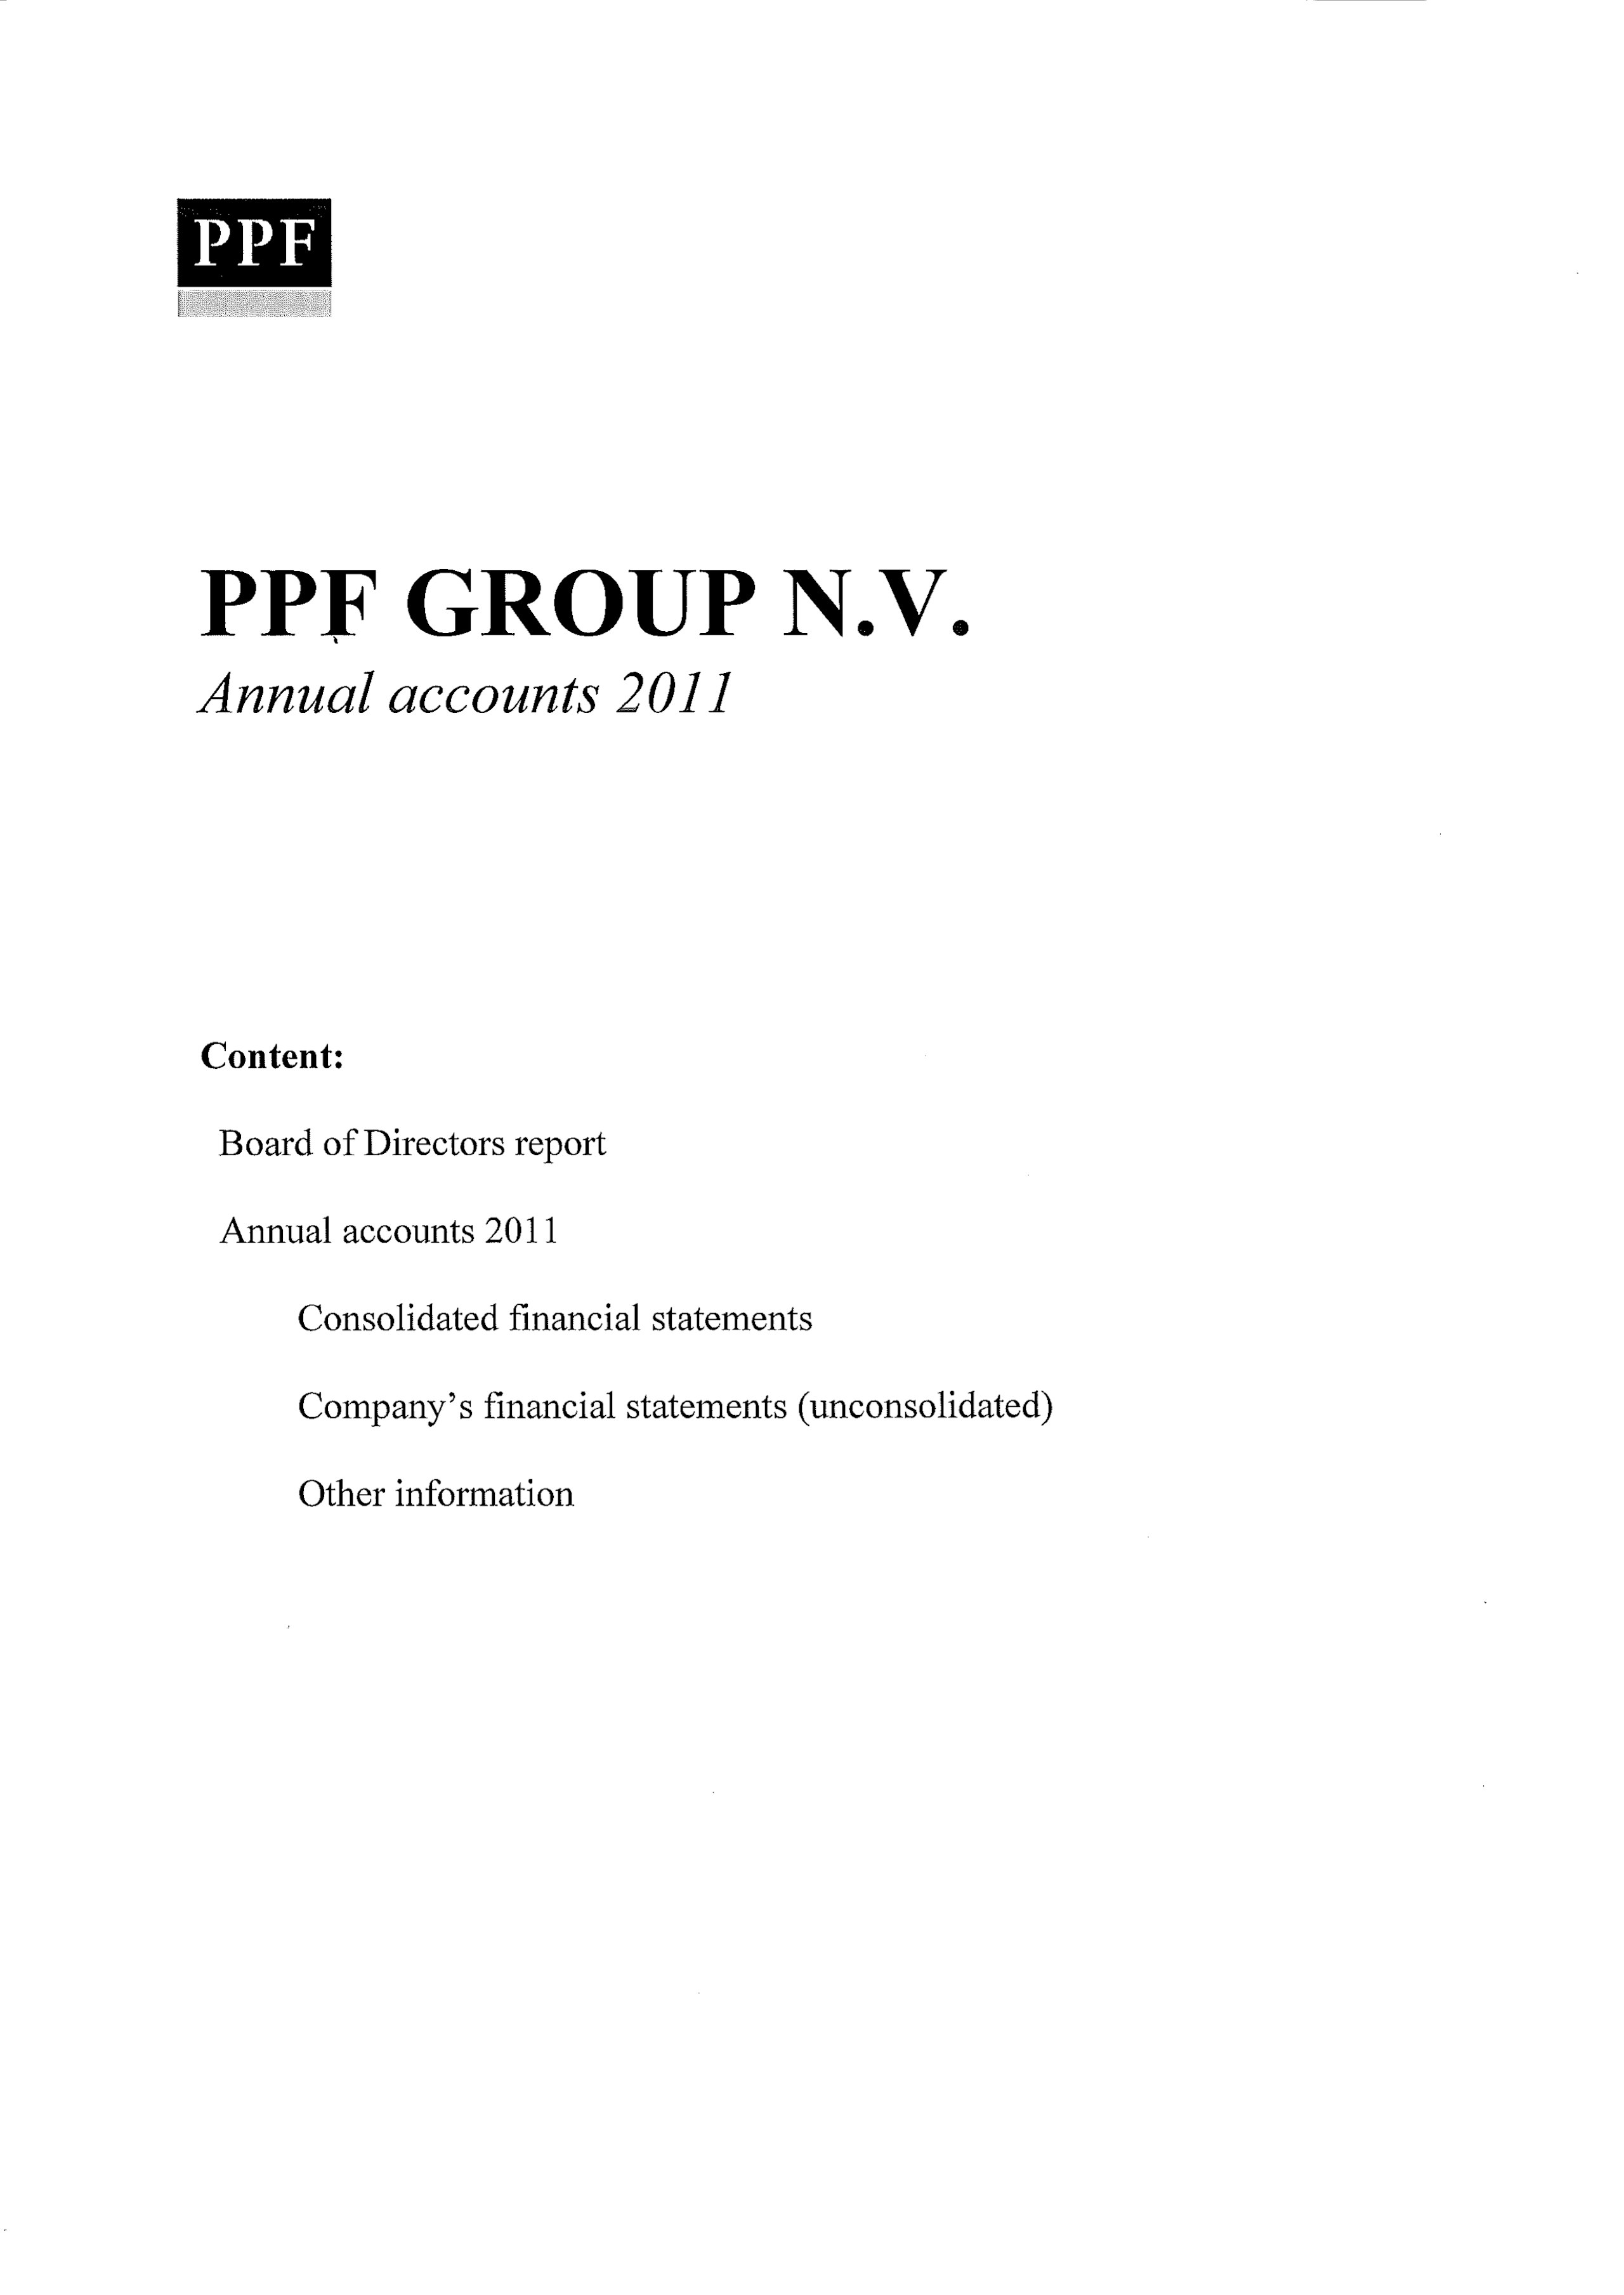 Annual Accounts PPF Group N.V. 2011 (4/6/2011)